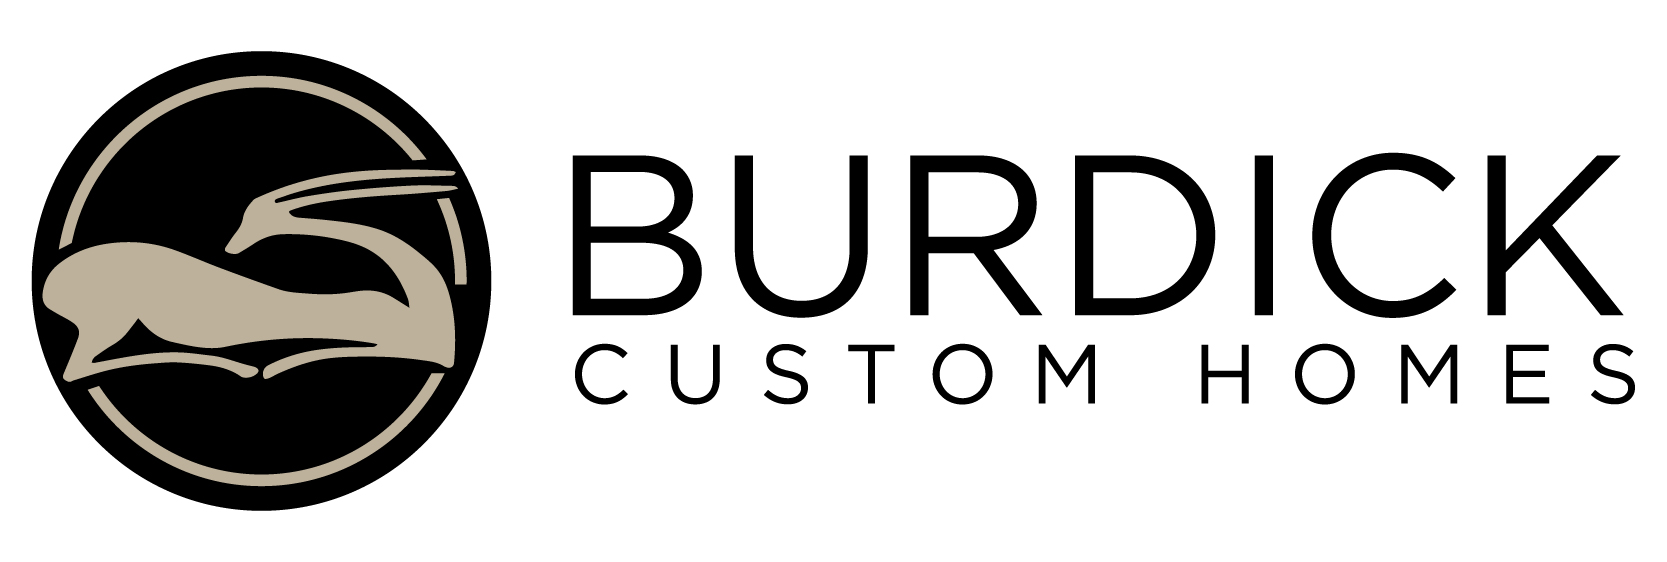 Burdick Custom Homes | New Homes